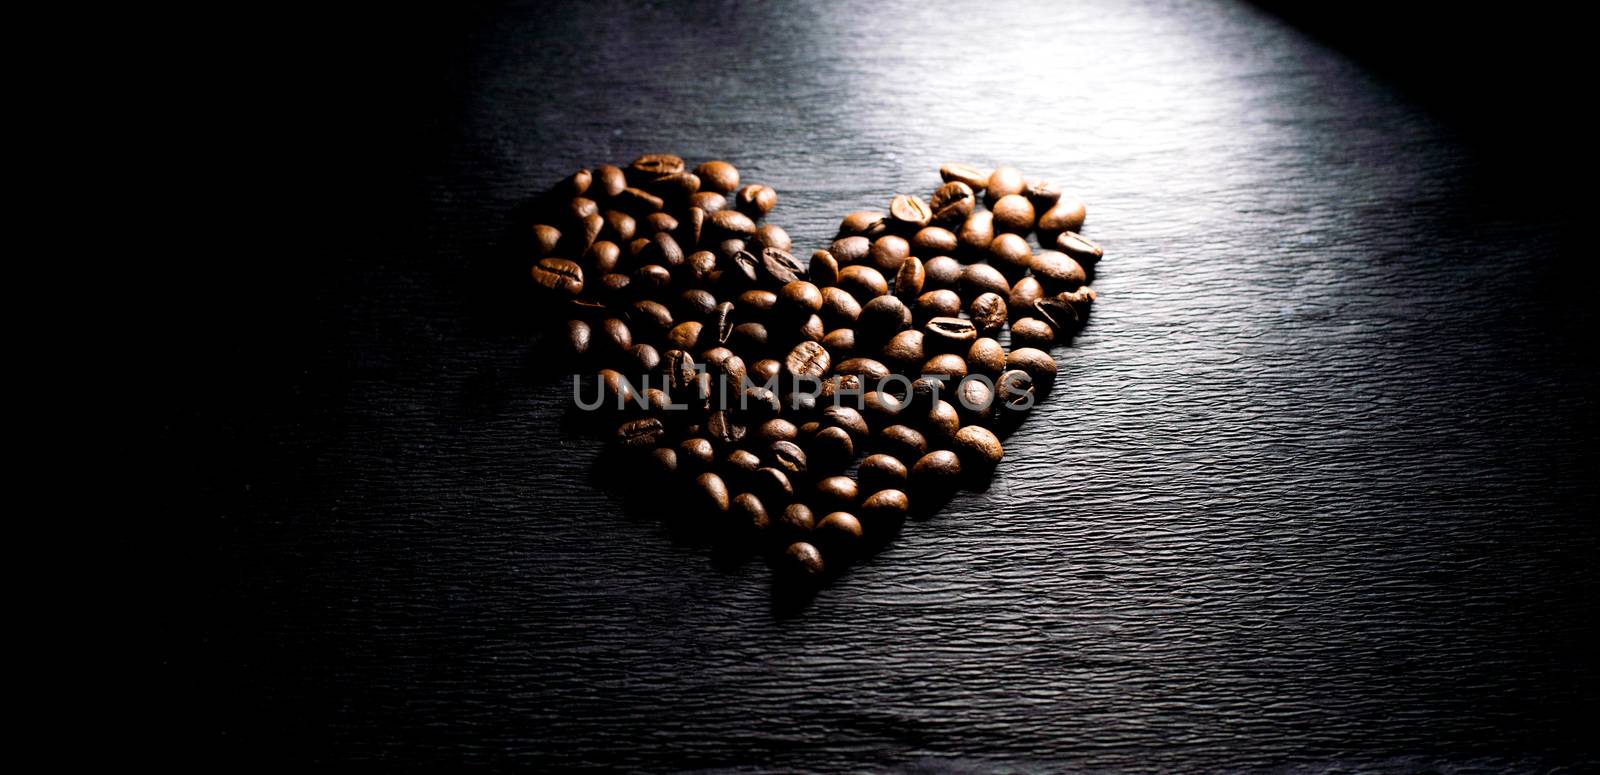 Heart shaped coffee beans